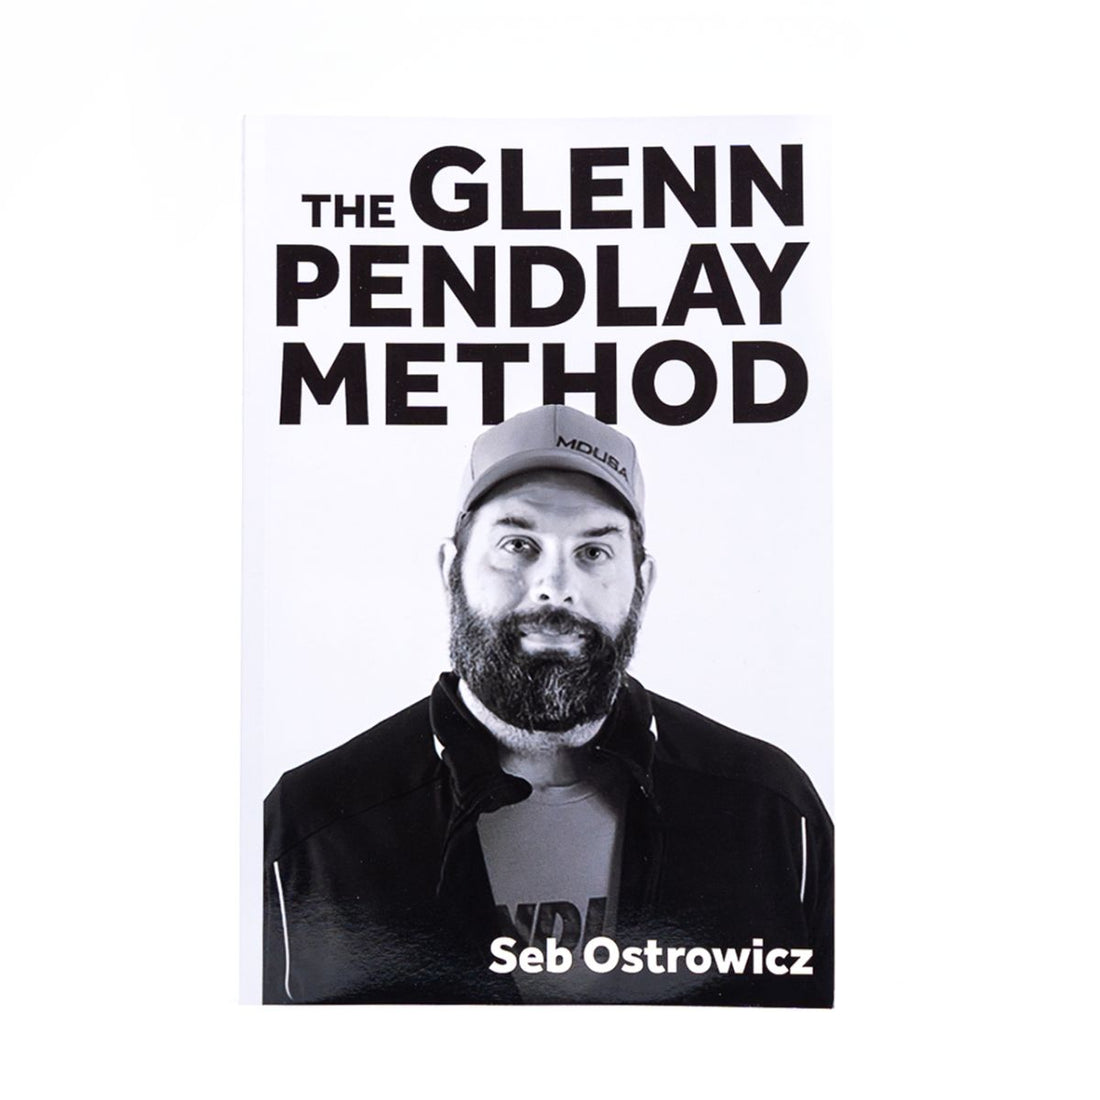 The Glenn Pendlay Method